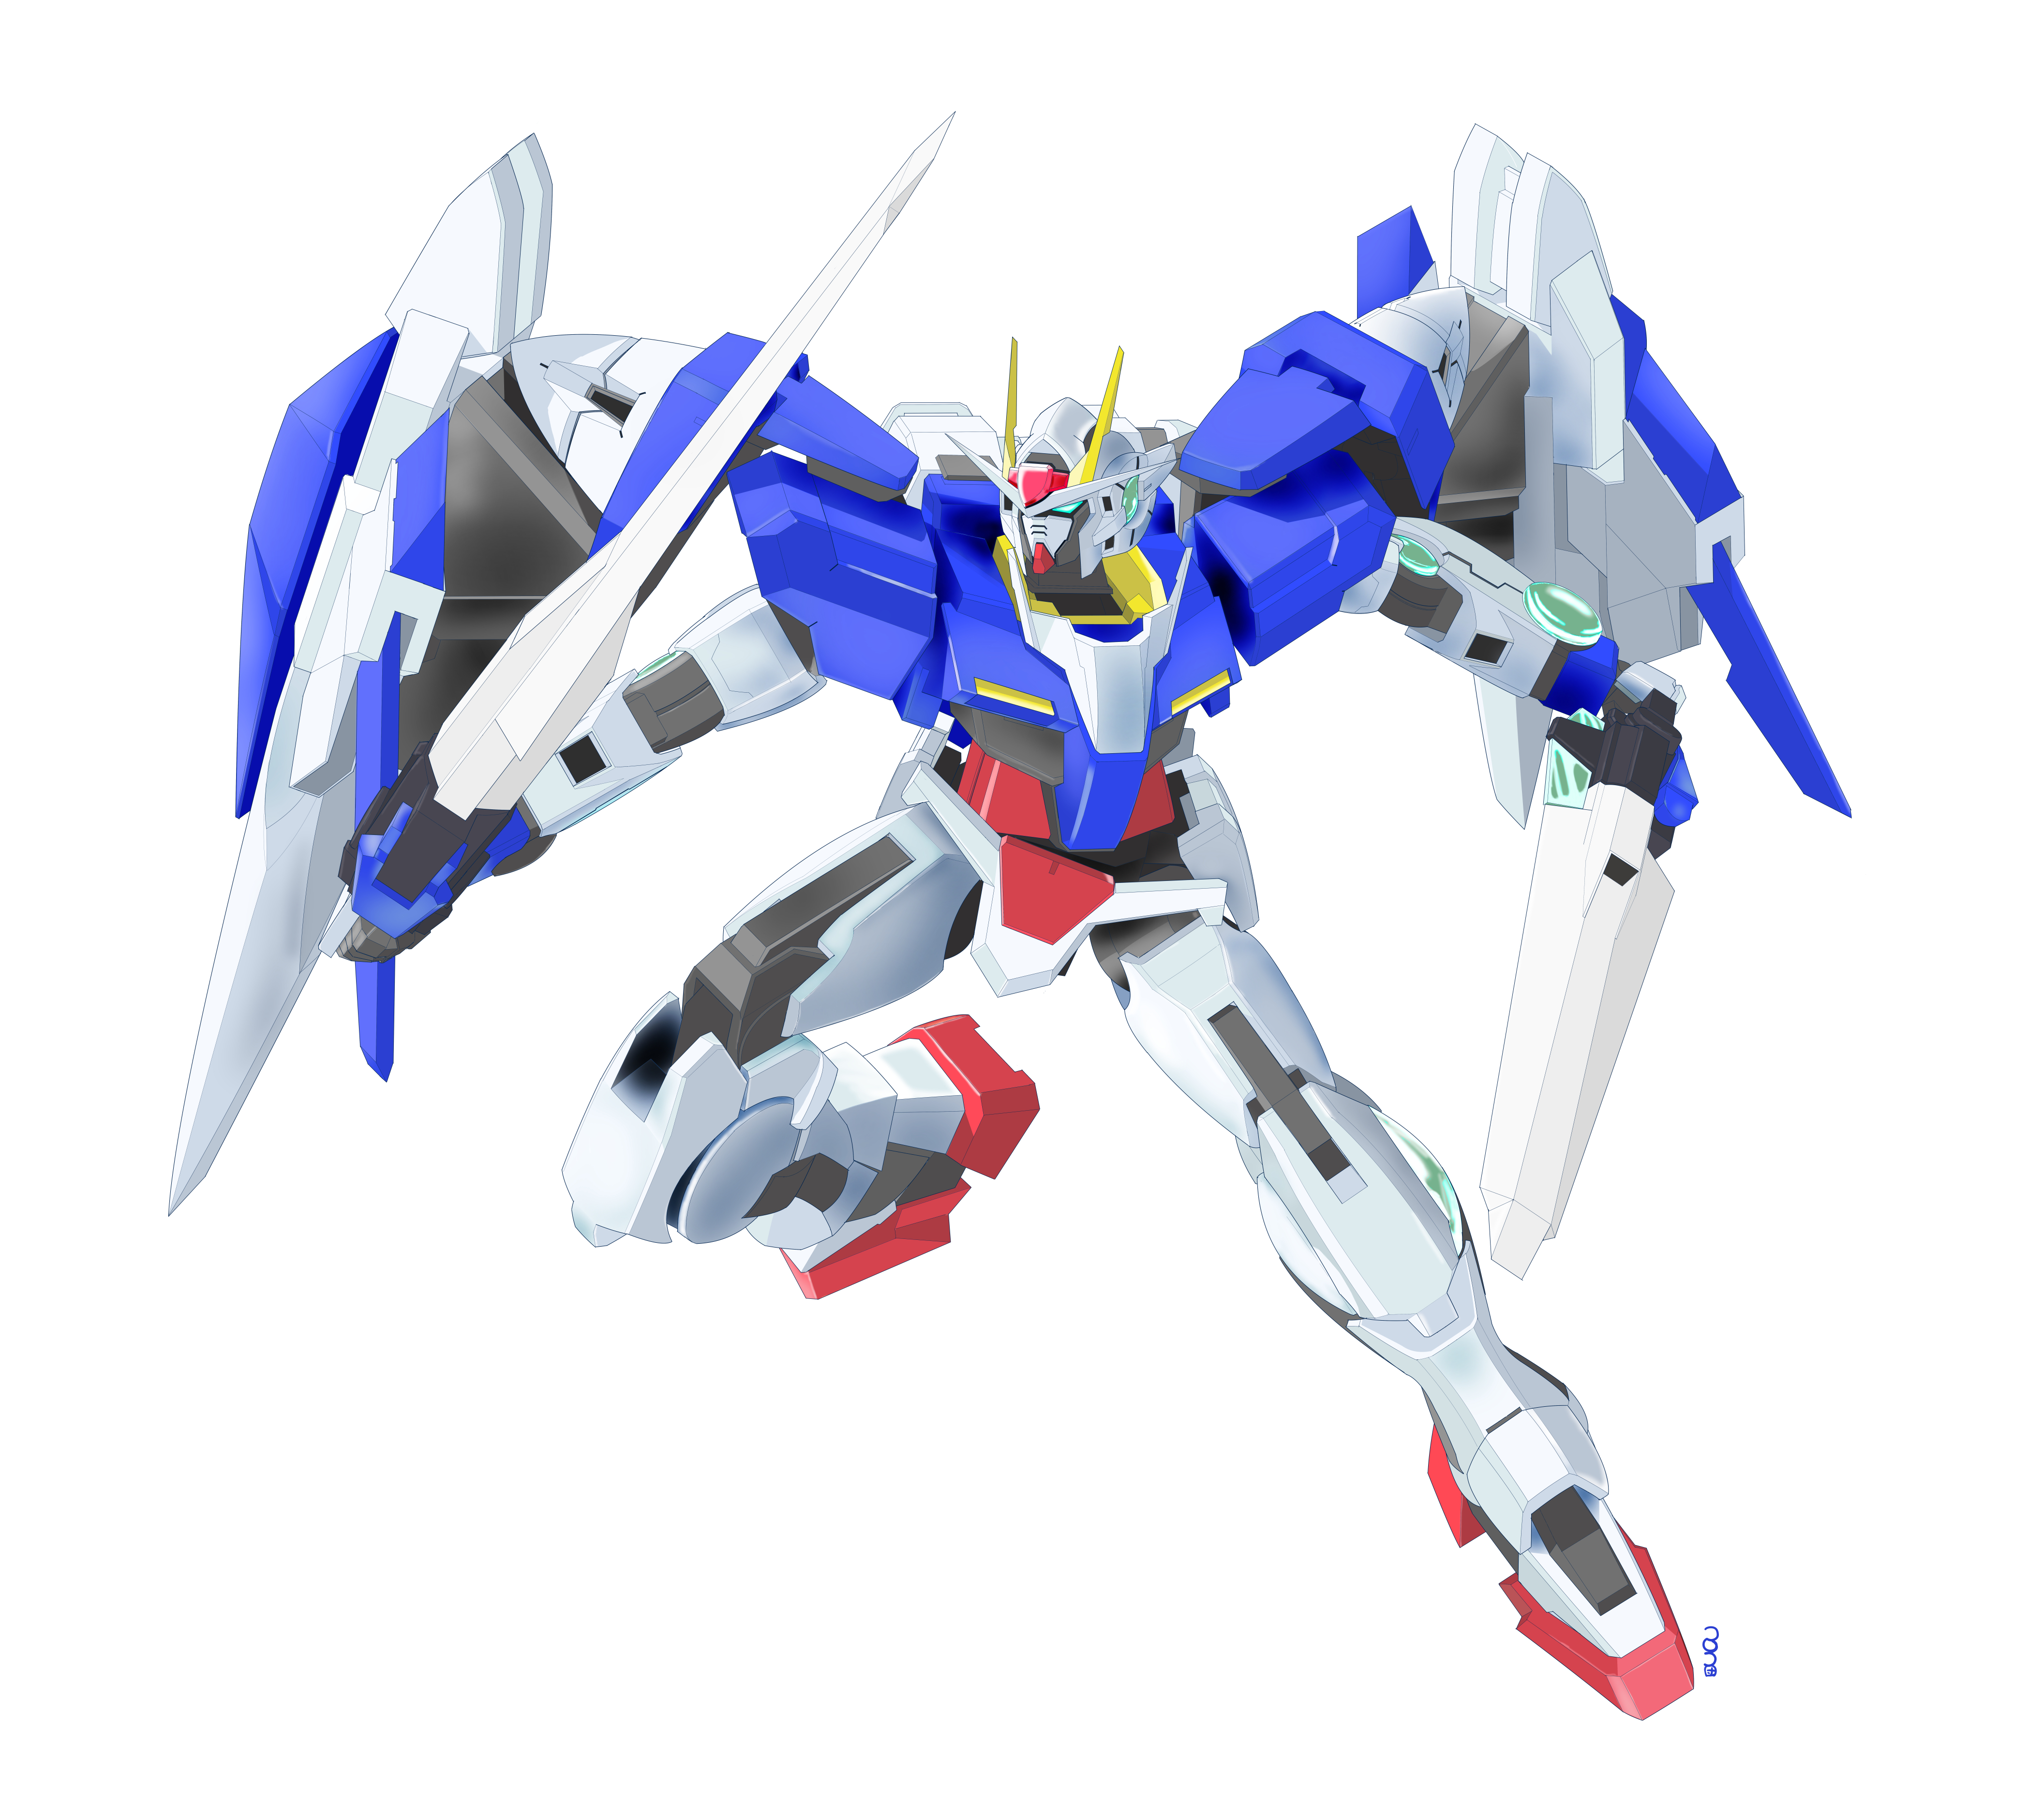 Anime Mechs Super Robot Wars Mobile Suit Gundam 00 Gundam 00 Raiser Artwork Digital Art Fan Art Whit 4225x3725